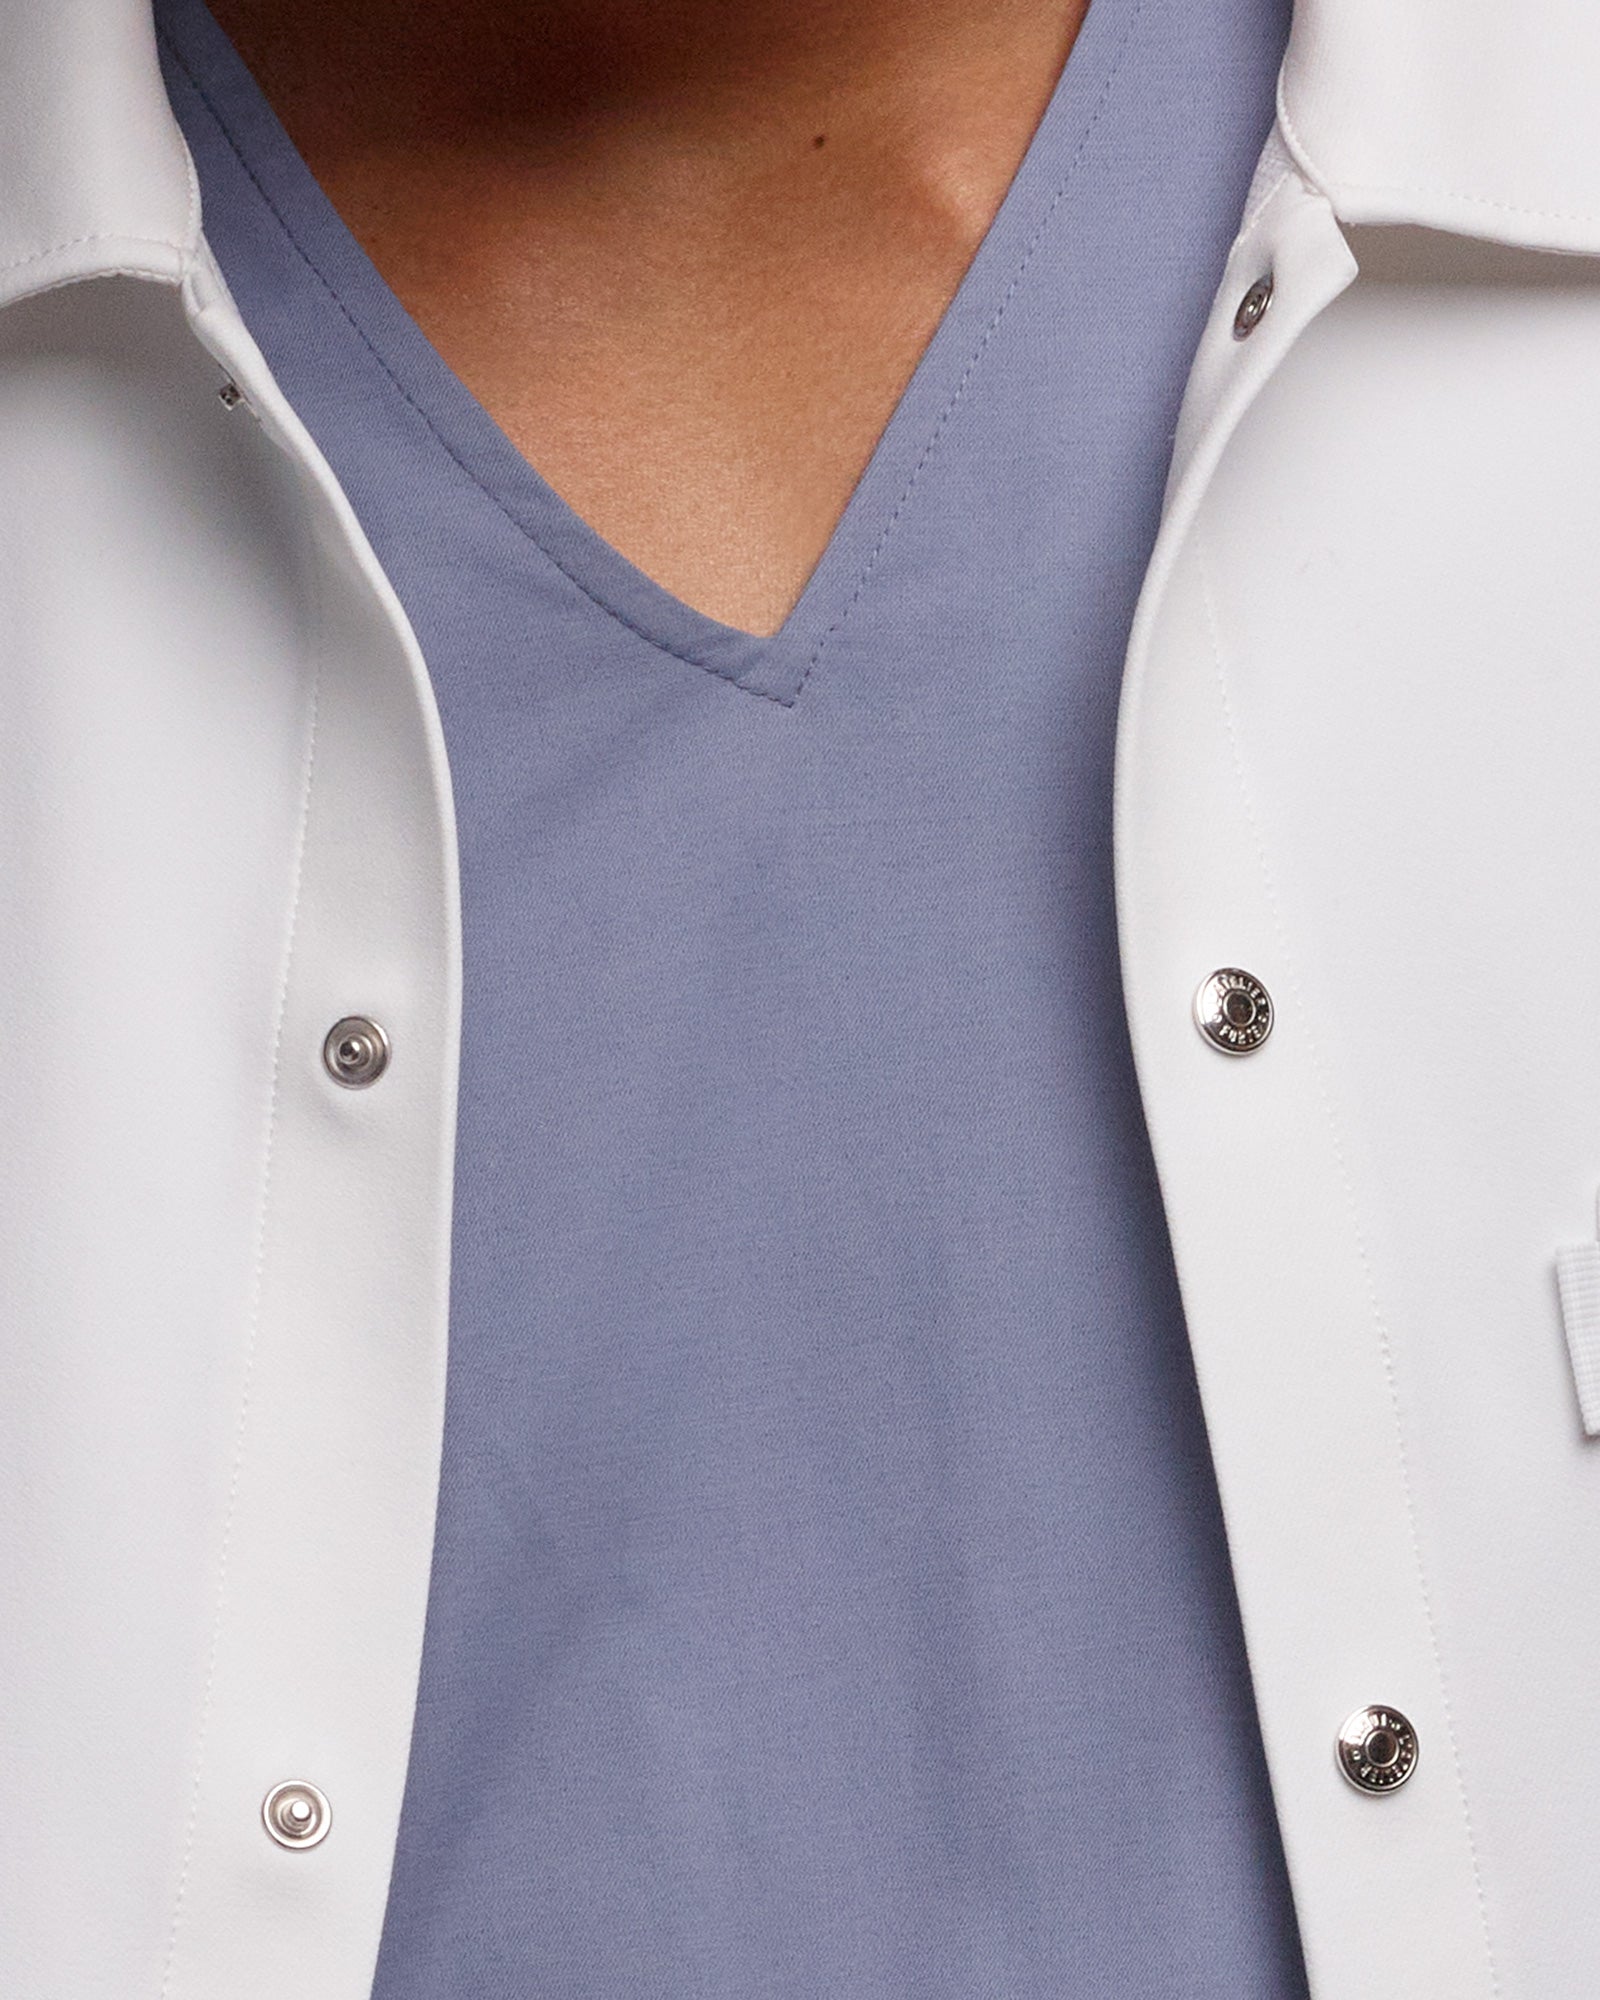 Men's 5-Pocket Doctor's Shirt